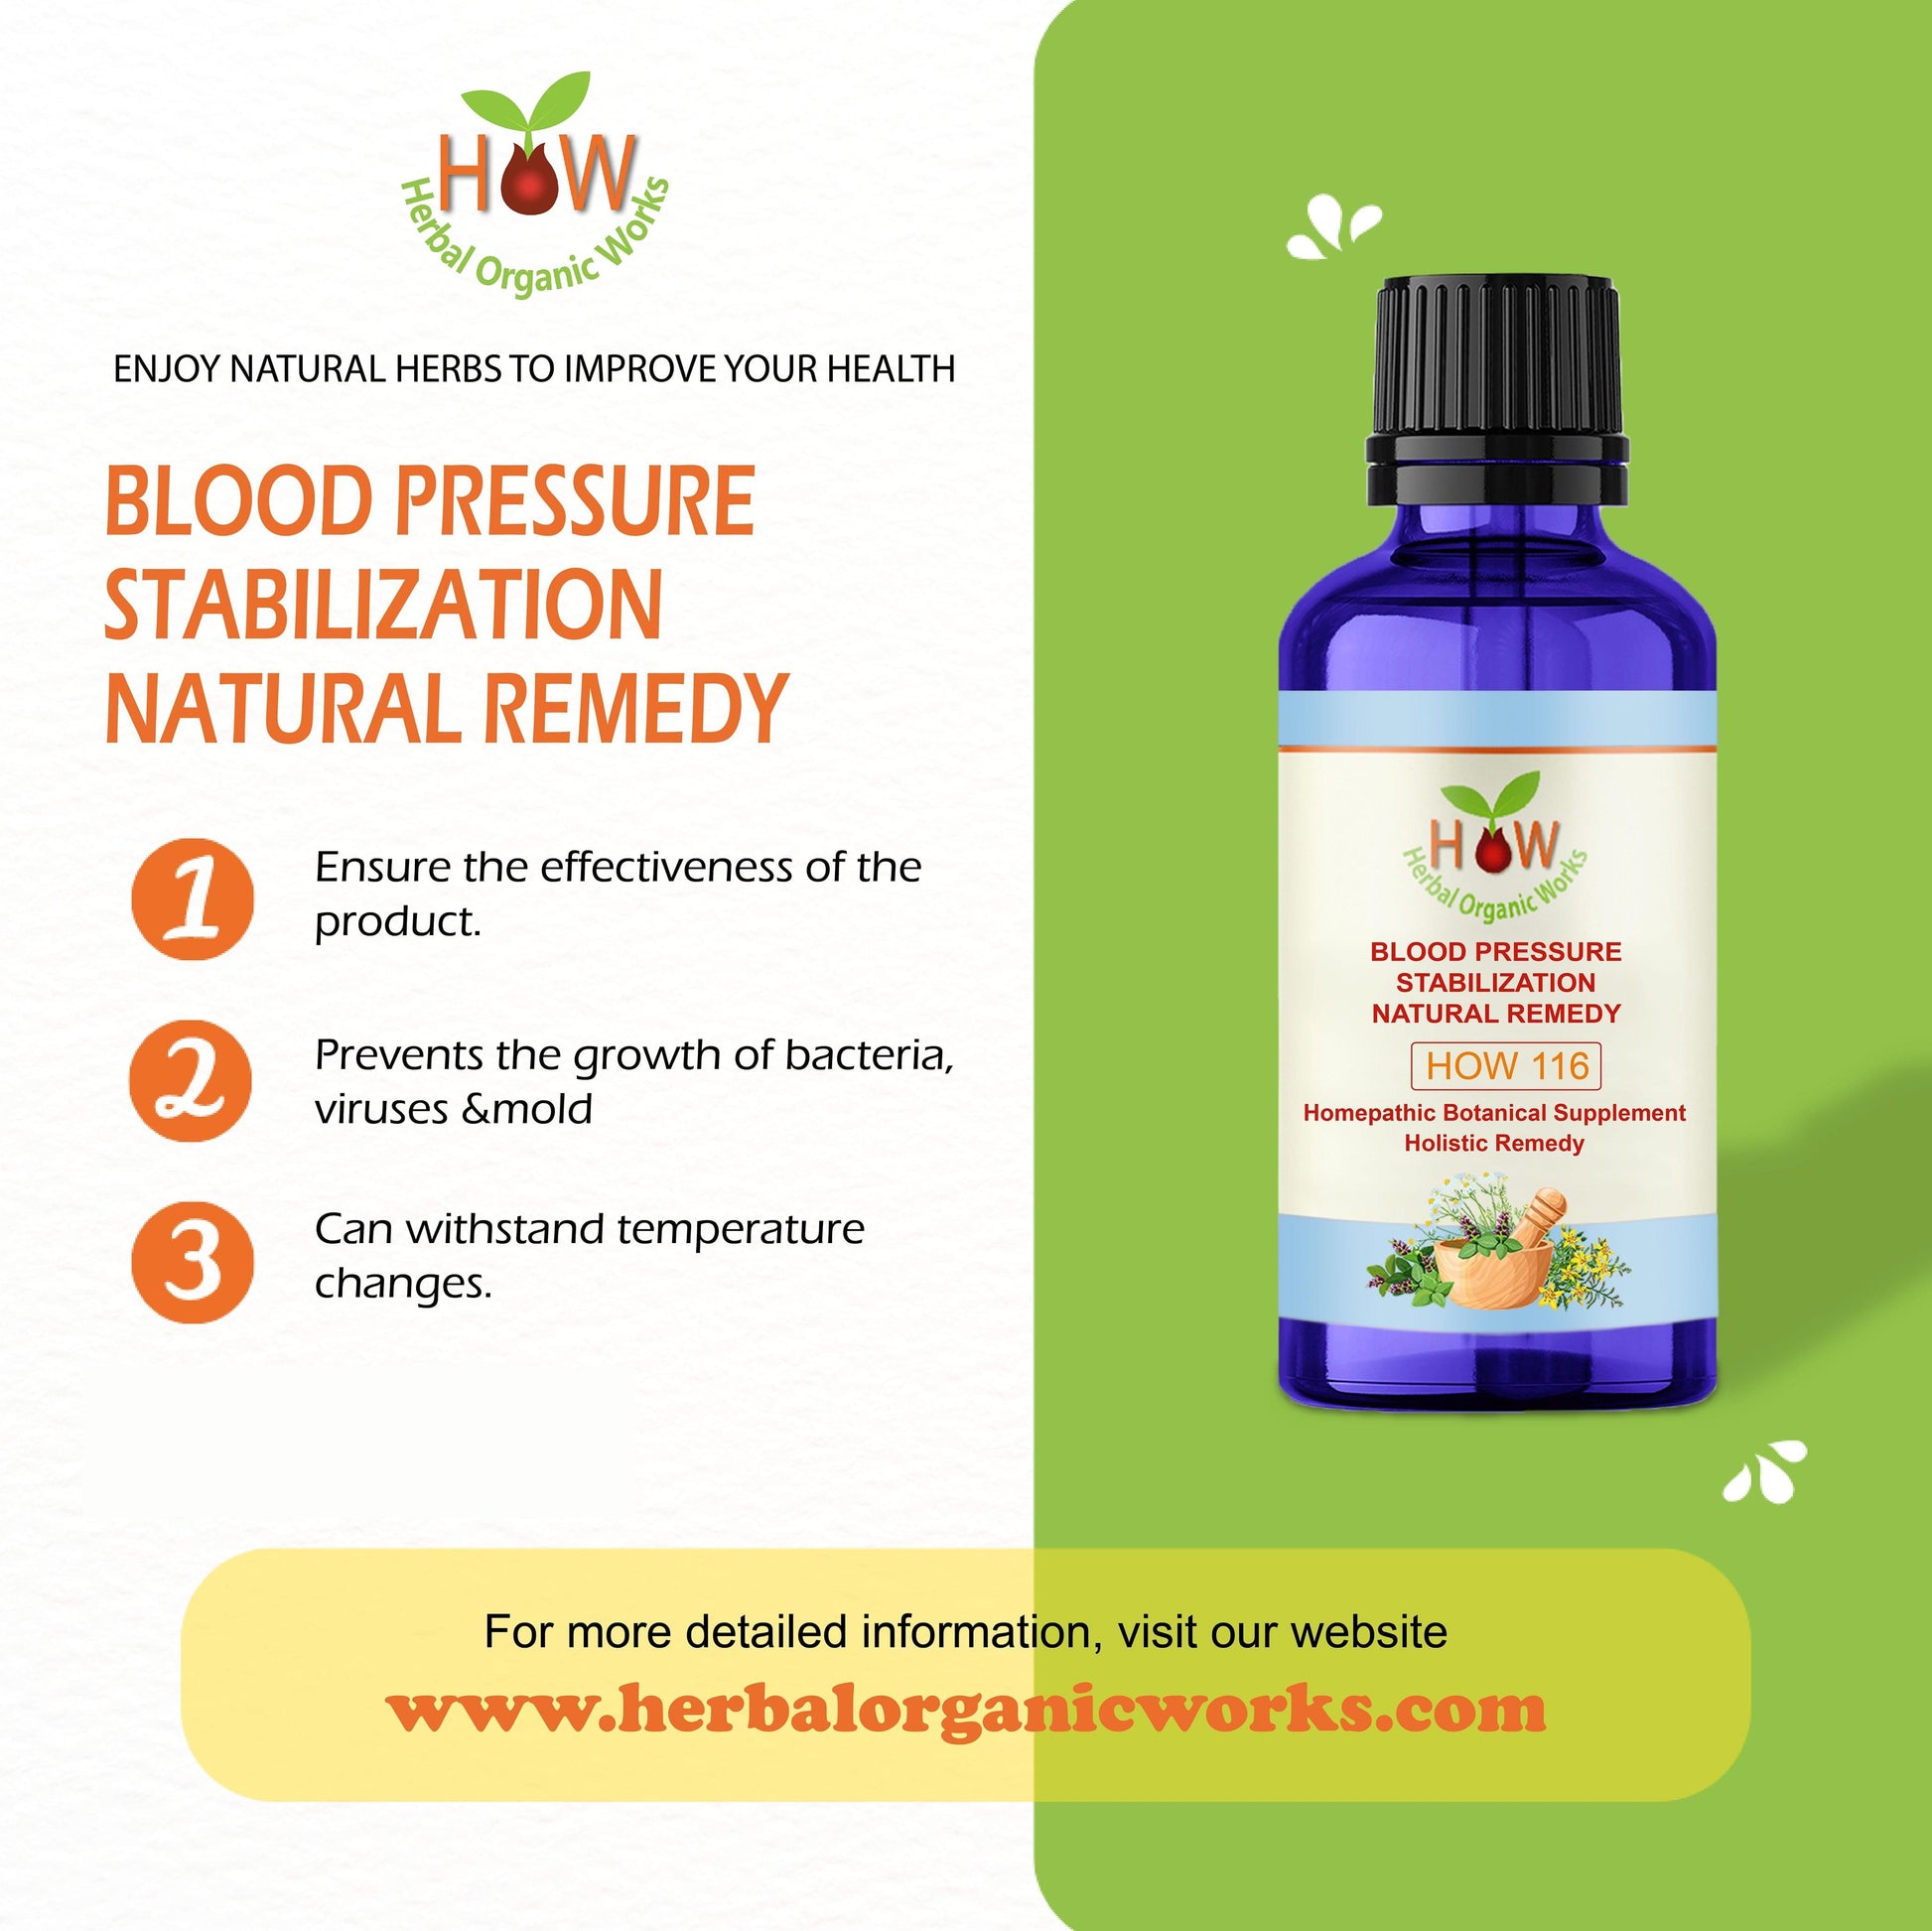 BLOOD PRESSURE STABILIZATION NATURAL REMEDY-(HOW116)